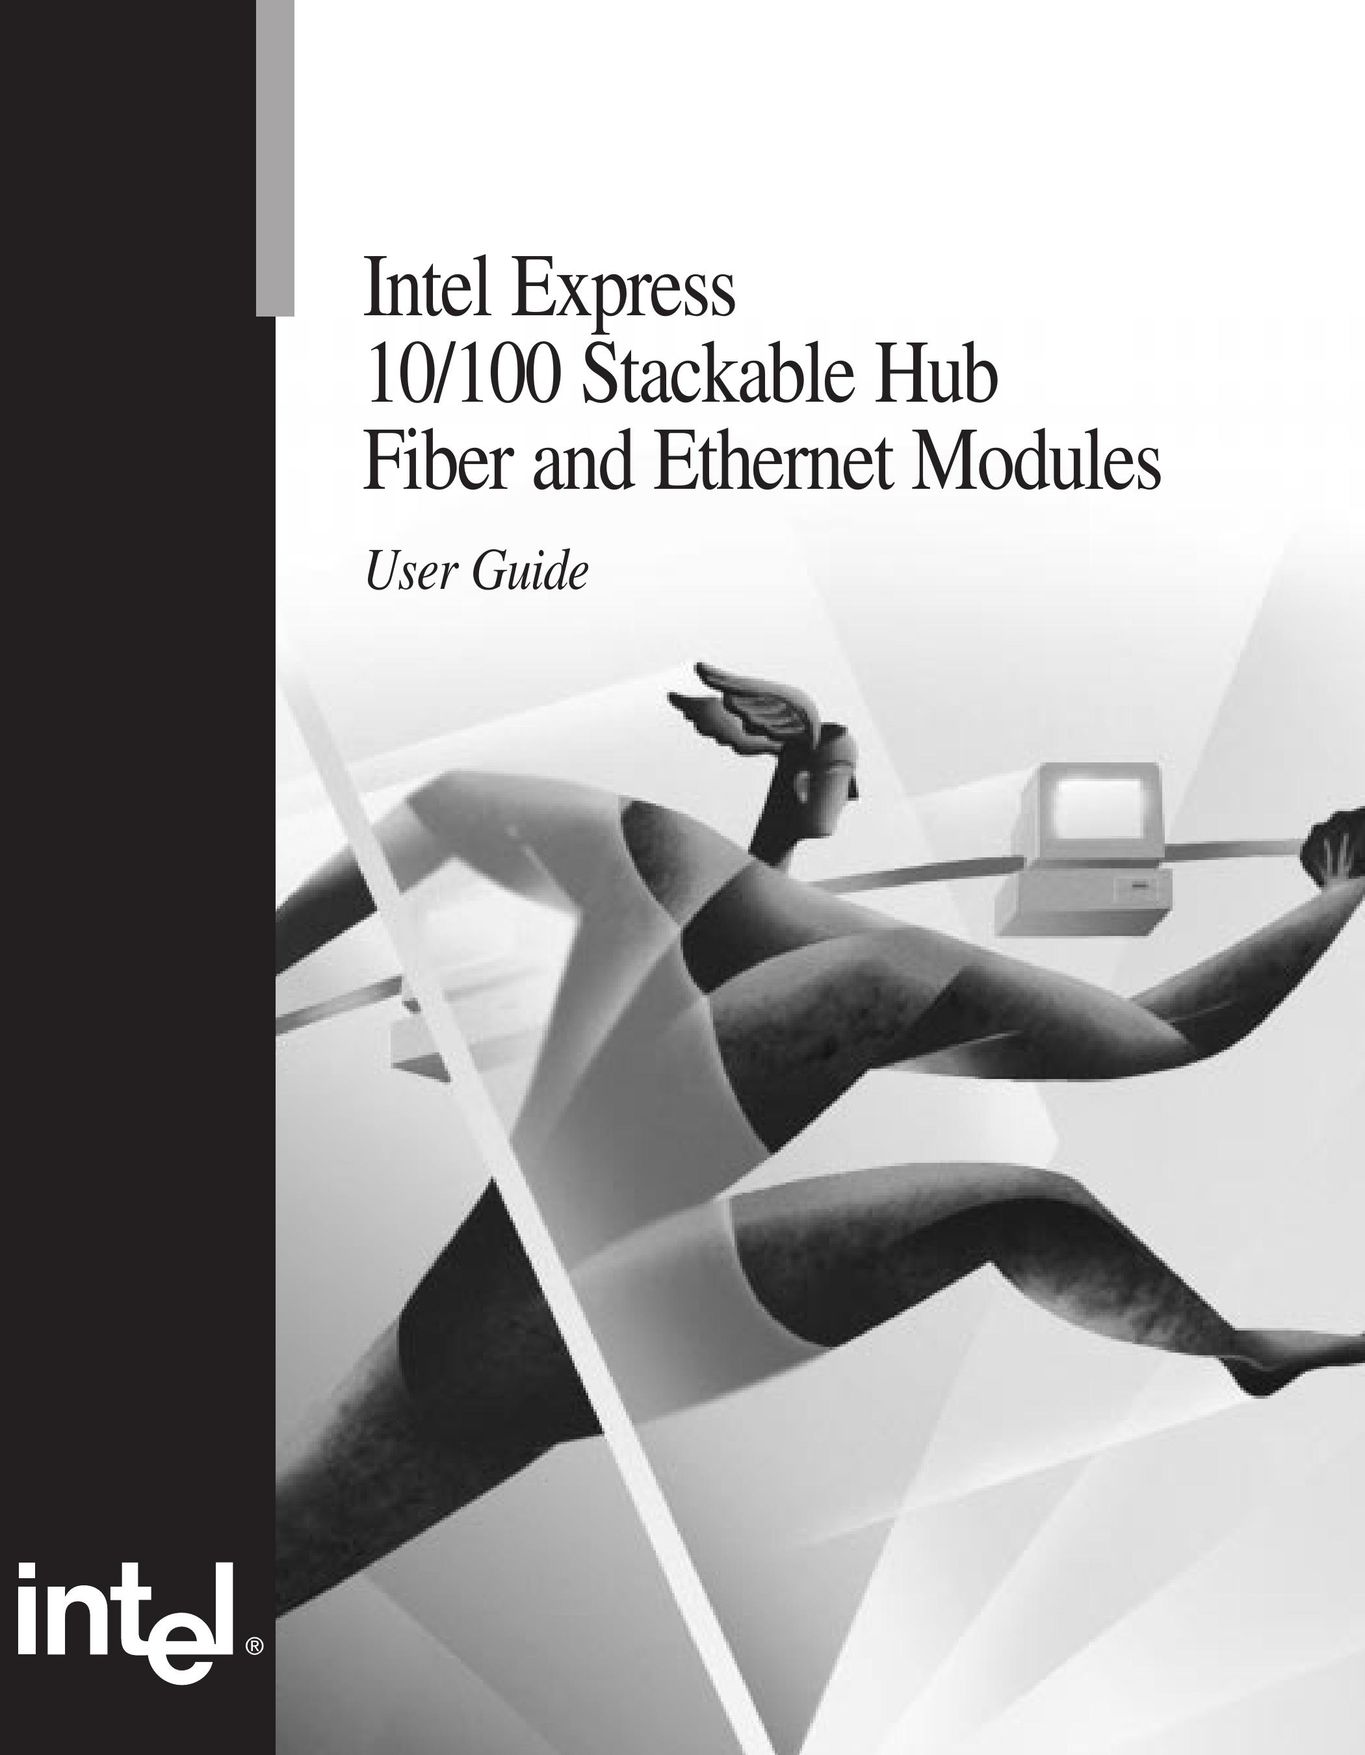 Intel EE110EM Plumbing Product User Manual